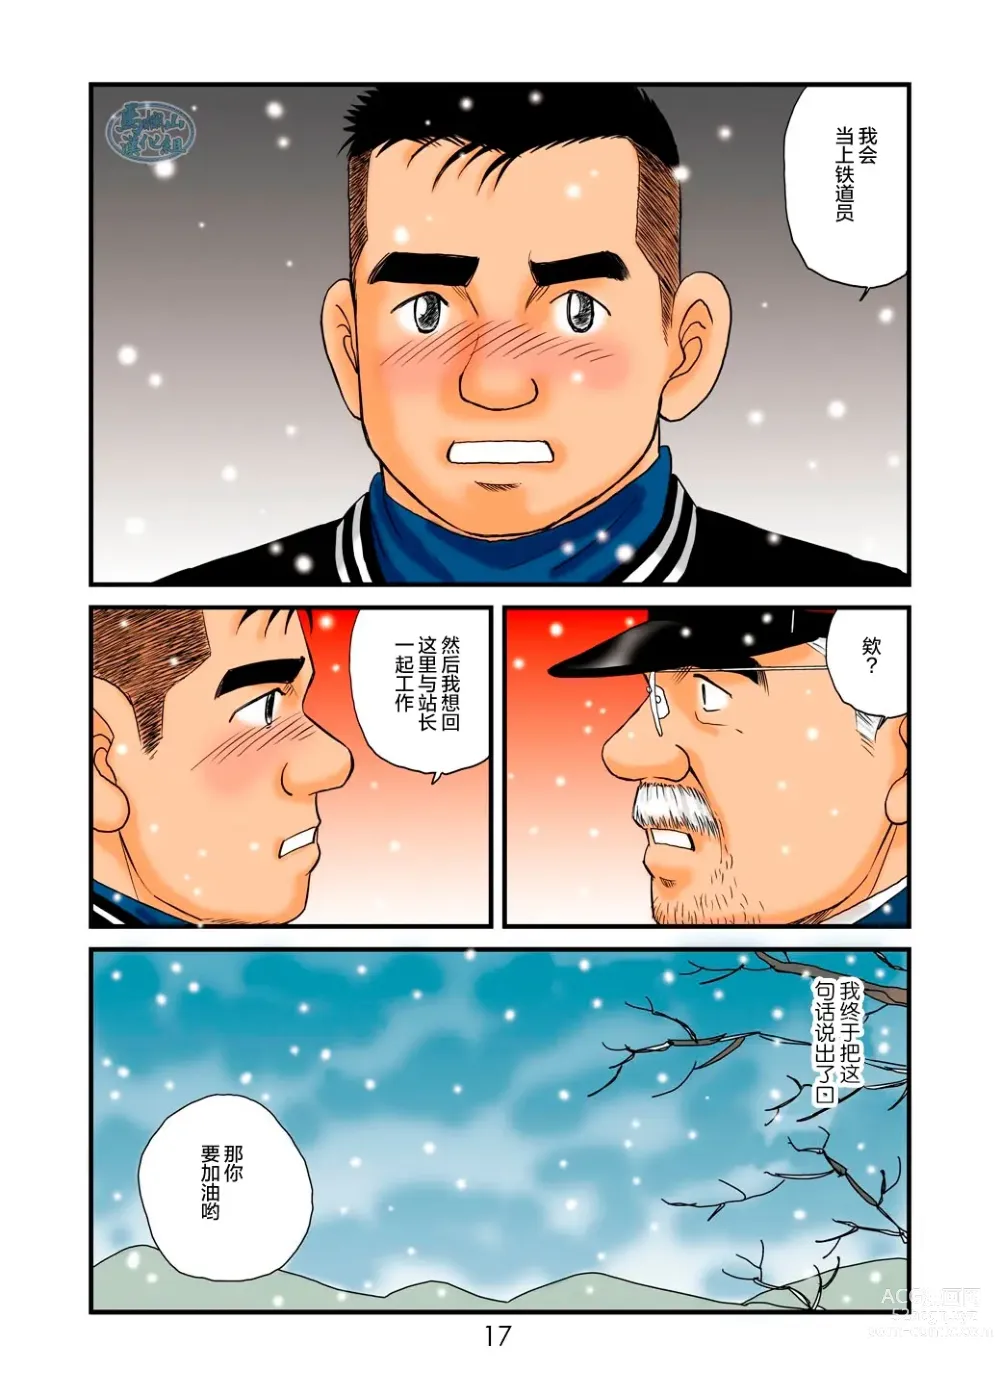 Page 17 of manga 「铁道员的浪漫」第一回 深夜的站长室